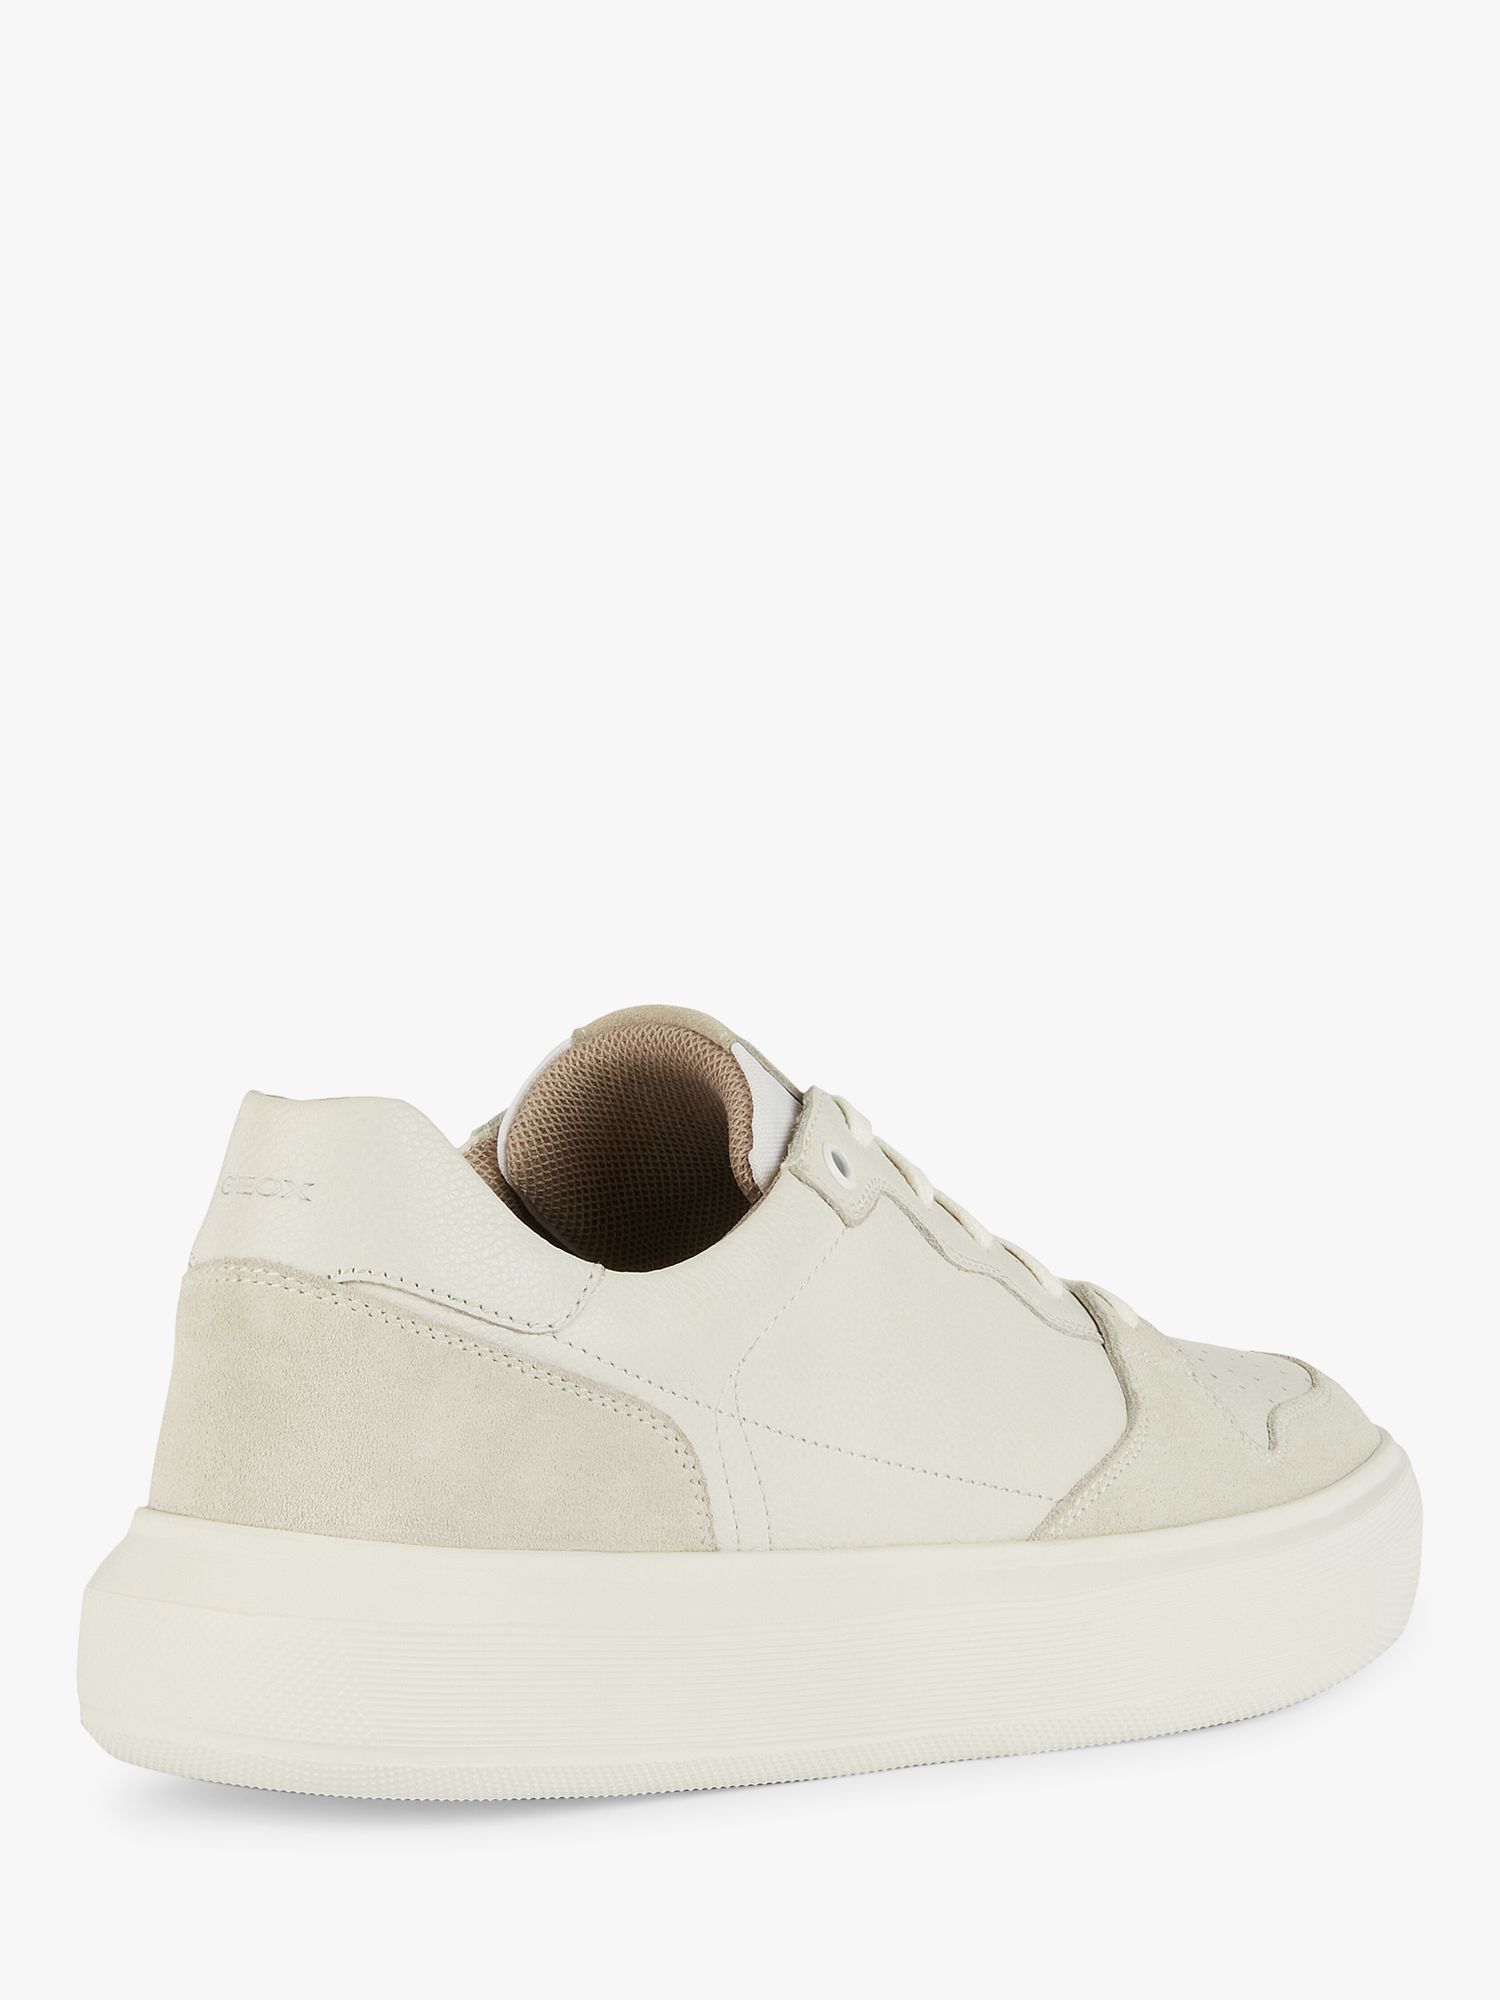 Geox Deiven Low Cut Sneakers, White, EU41